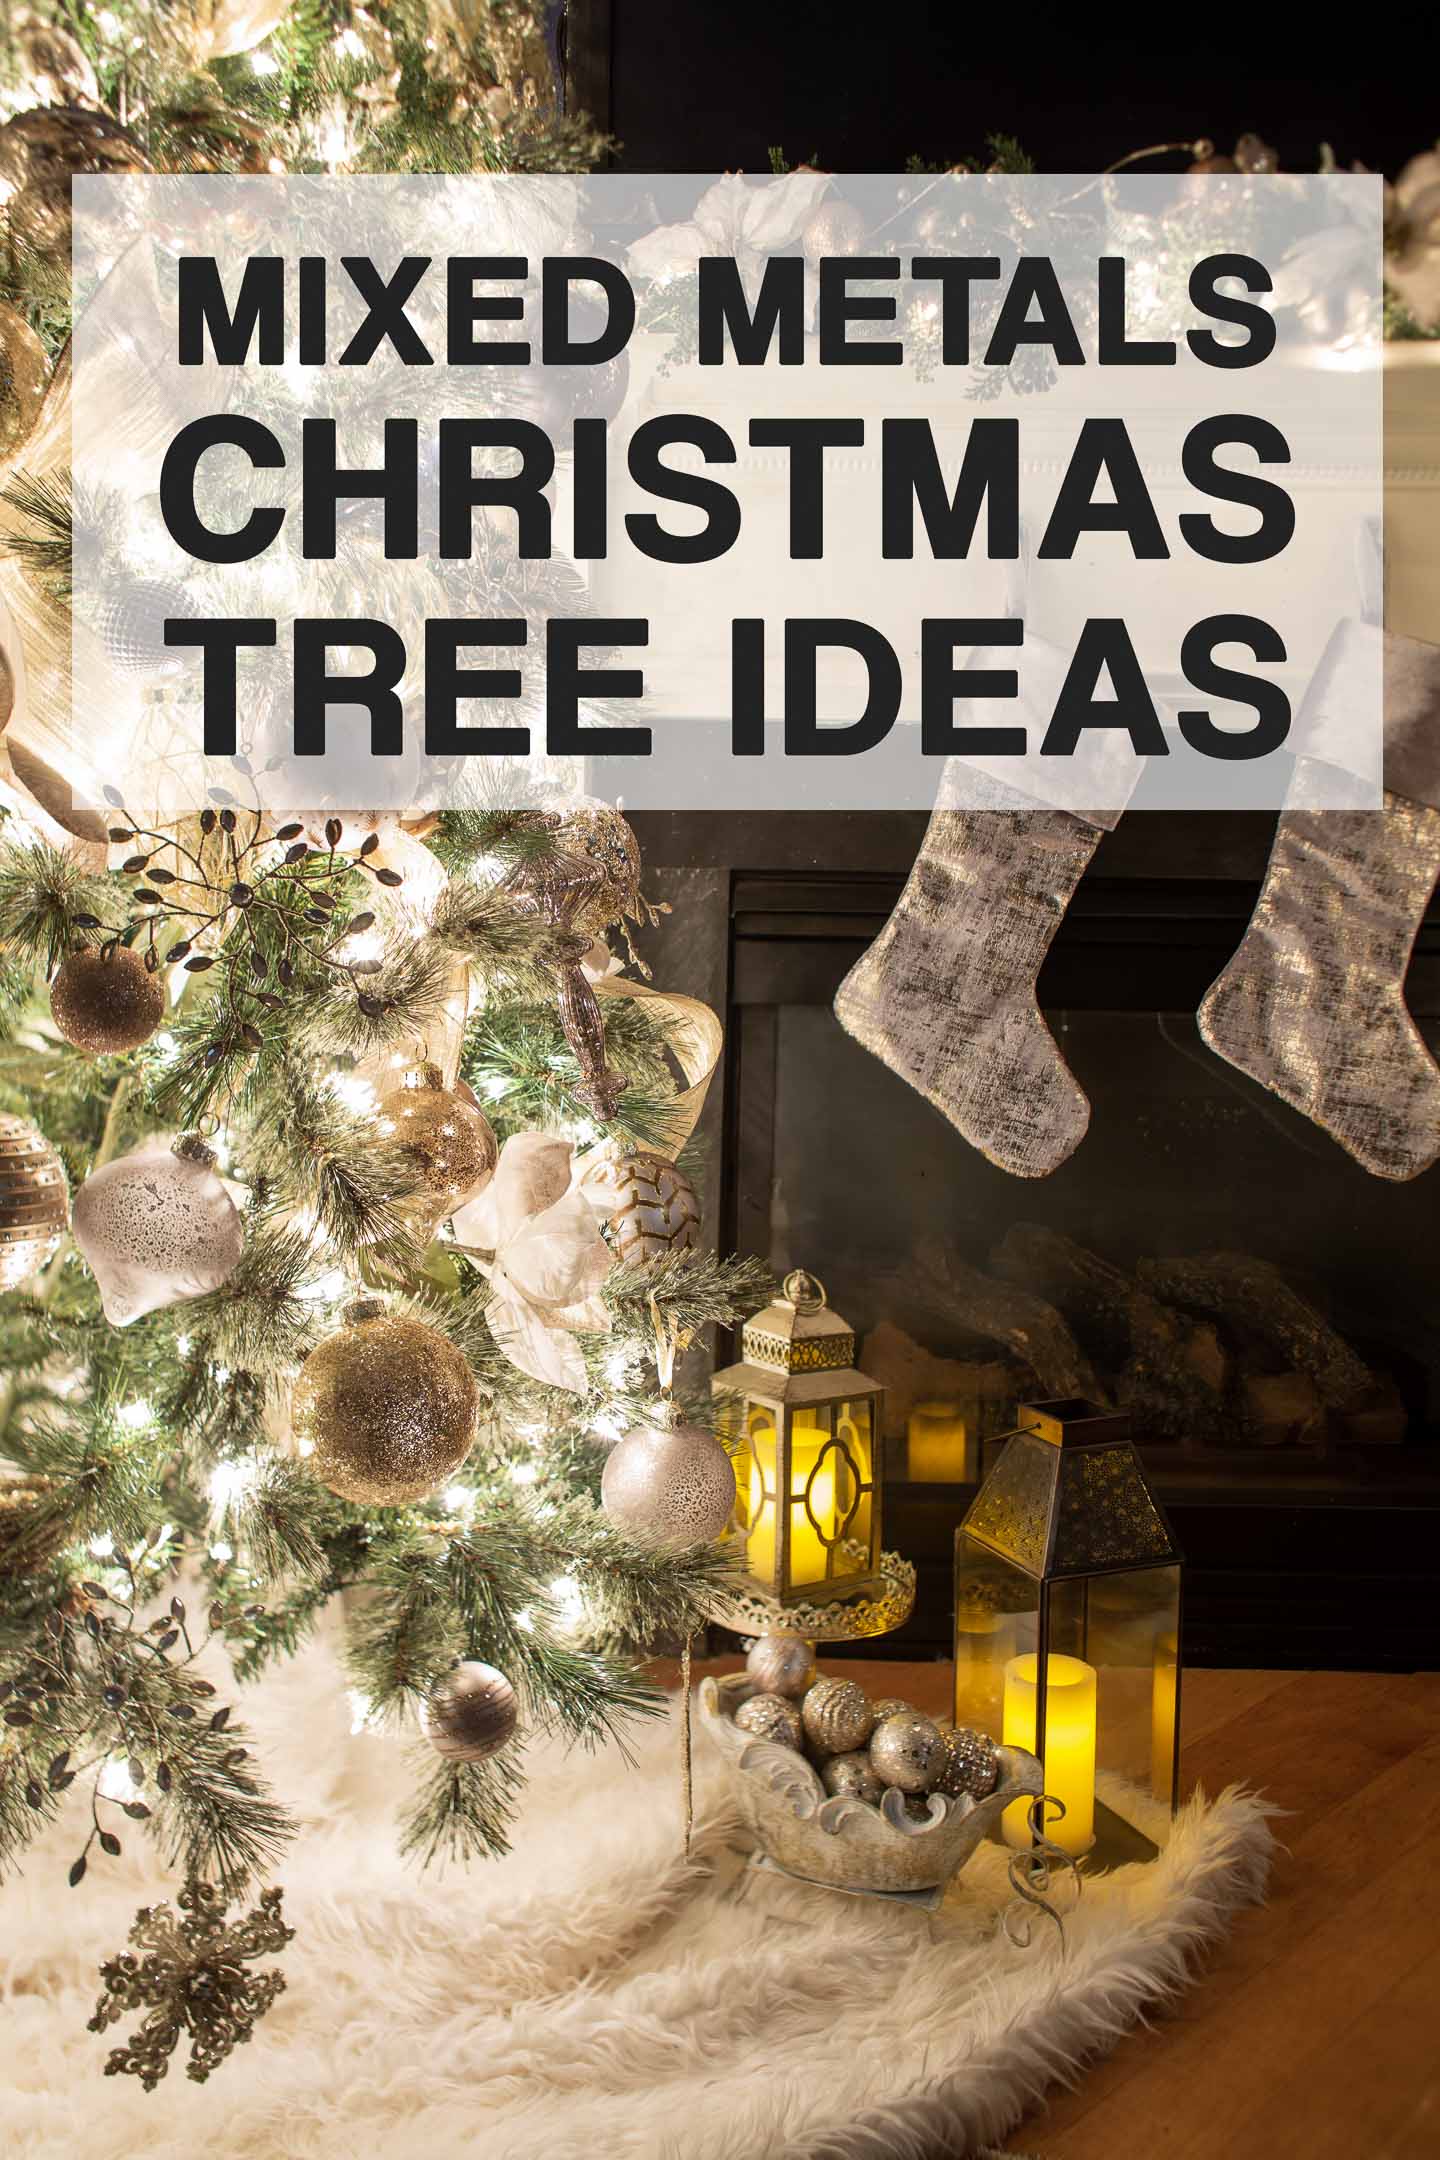 Mixed Metals Christmas Tree Decor Ideas